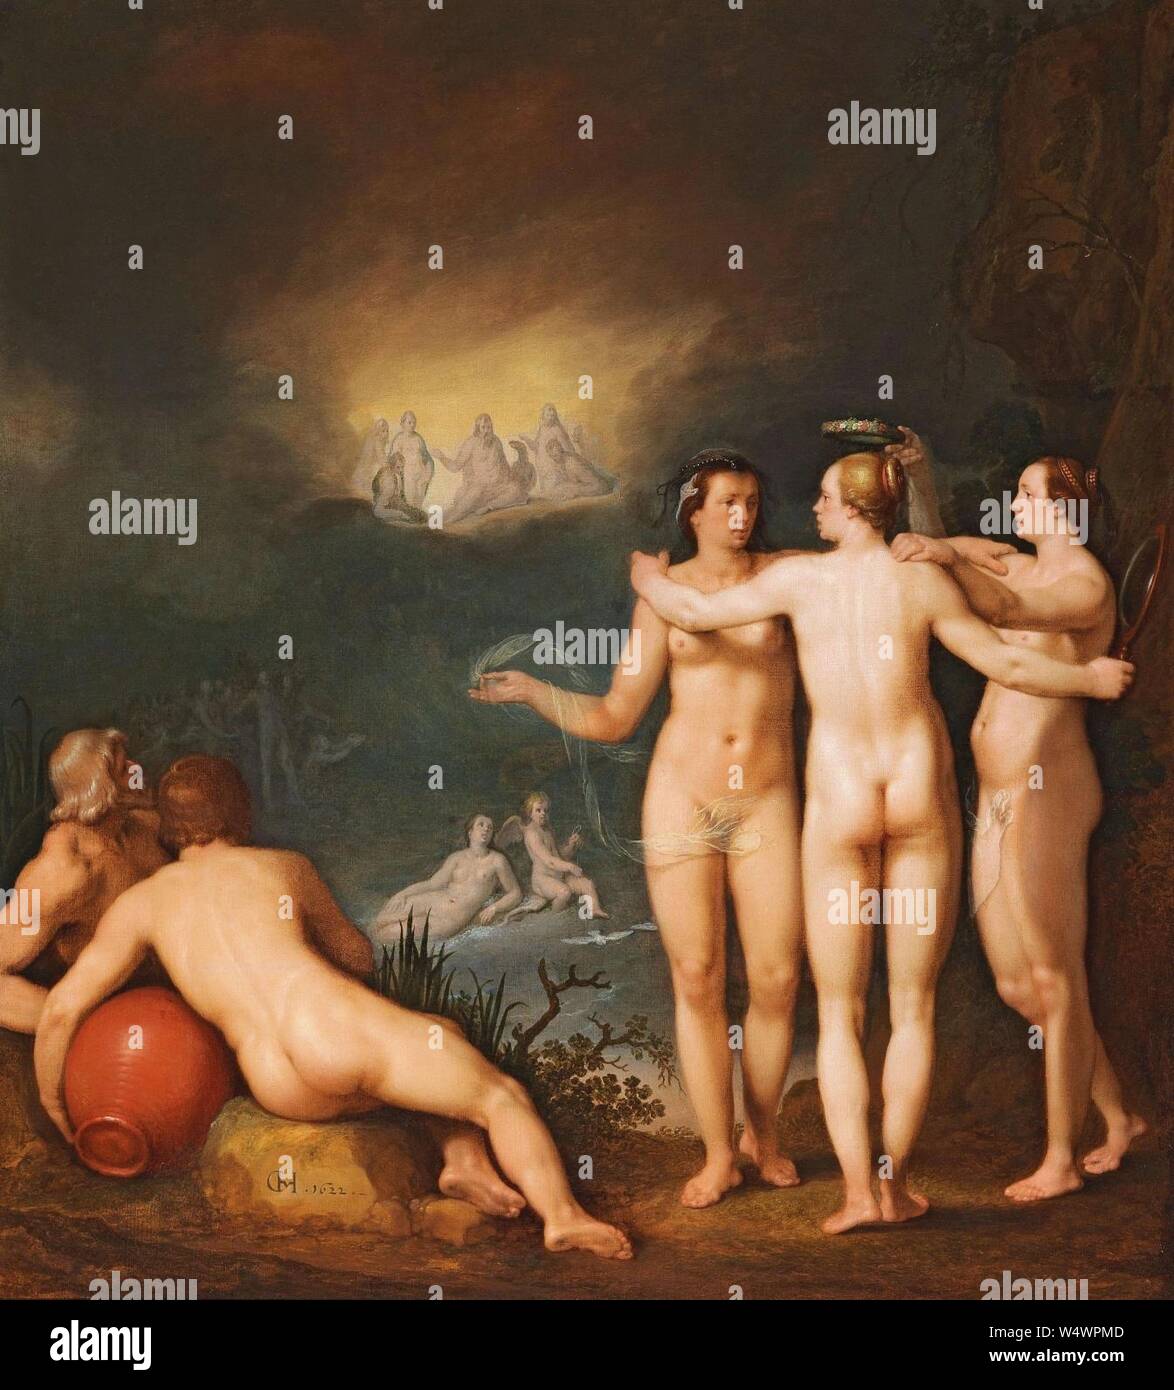 Cornelis Cornelisz. van Haarlem - An allegorical scene featuring the Three Graces Aglaia. Stock Photo